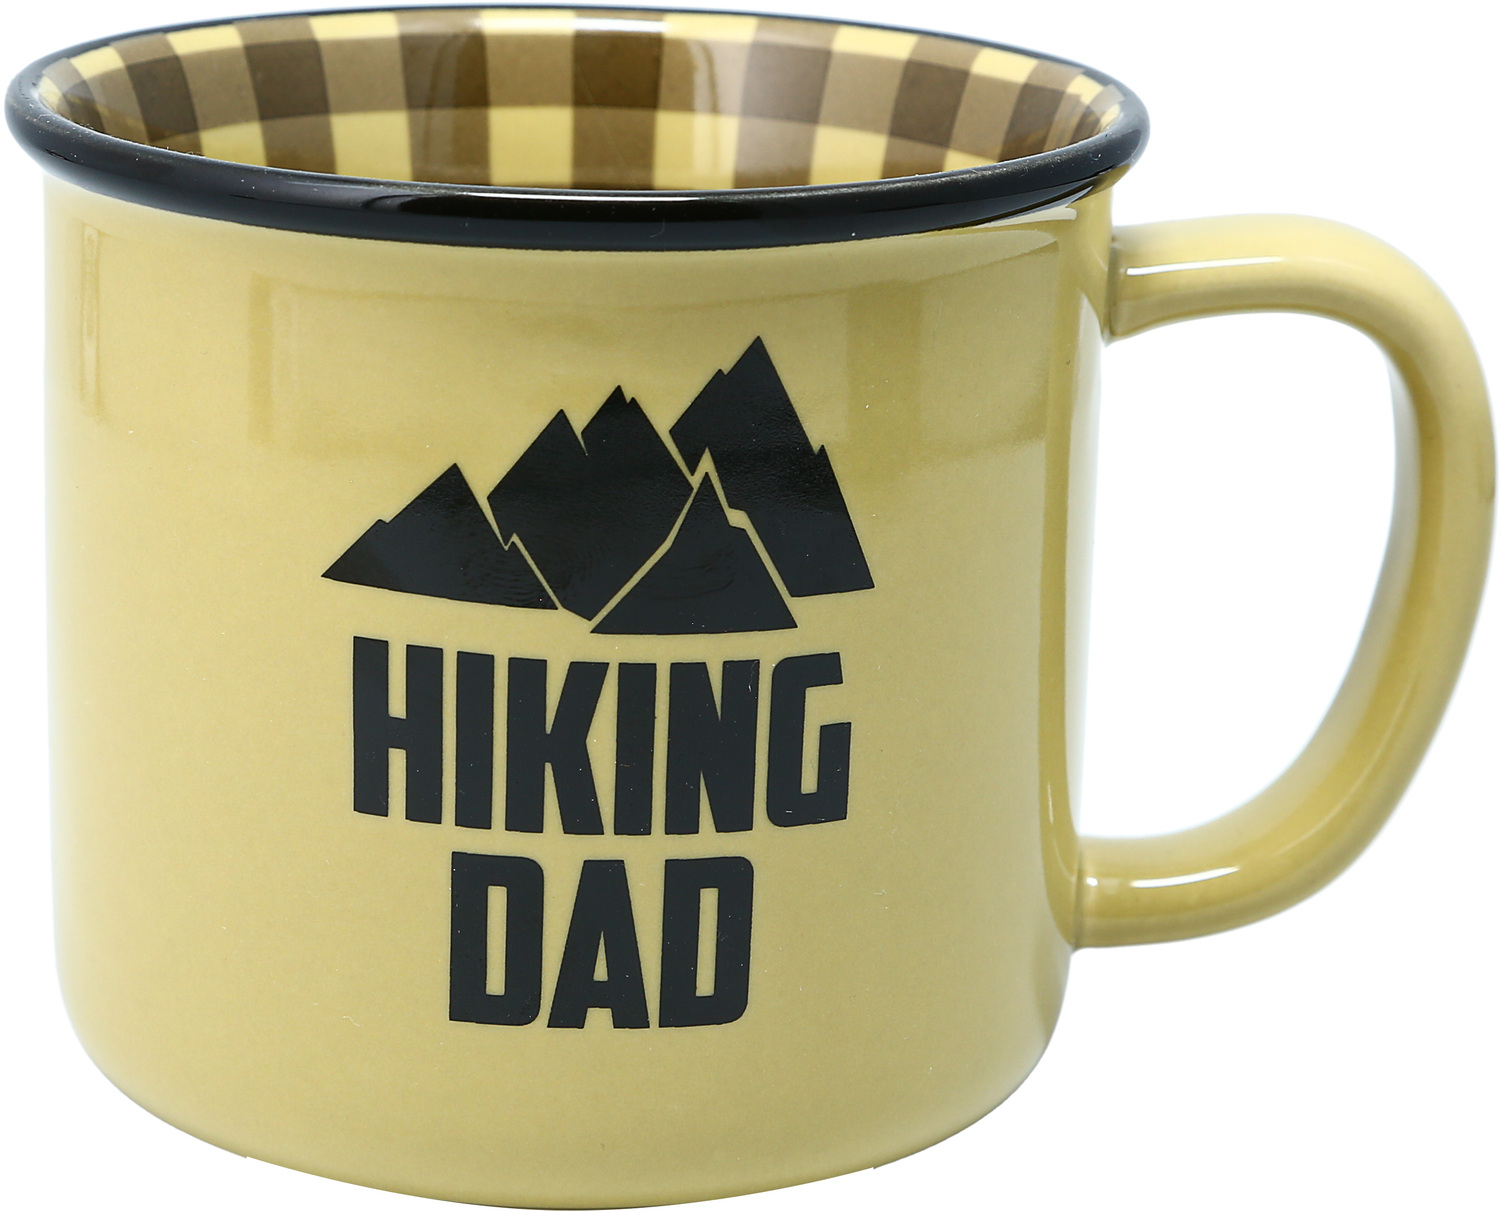 Hiking Dad by Man Out - Hiking Dad - 18 oz Mug